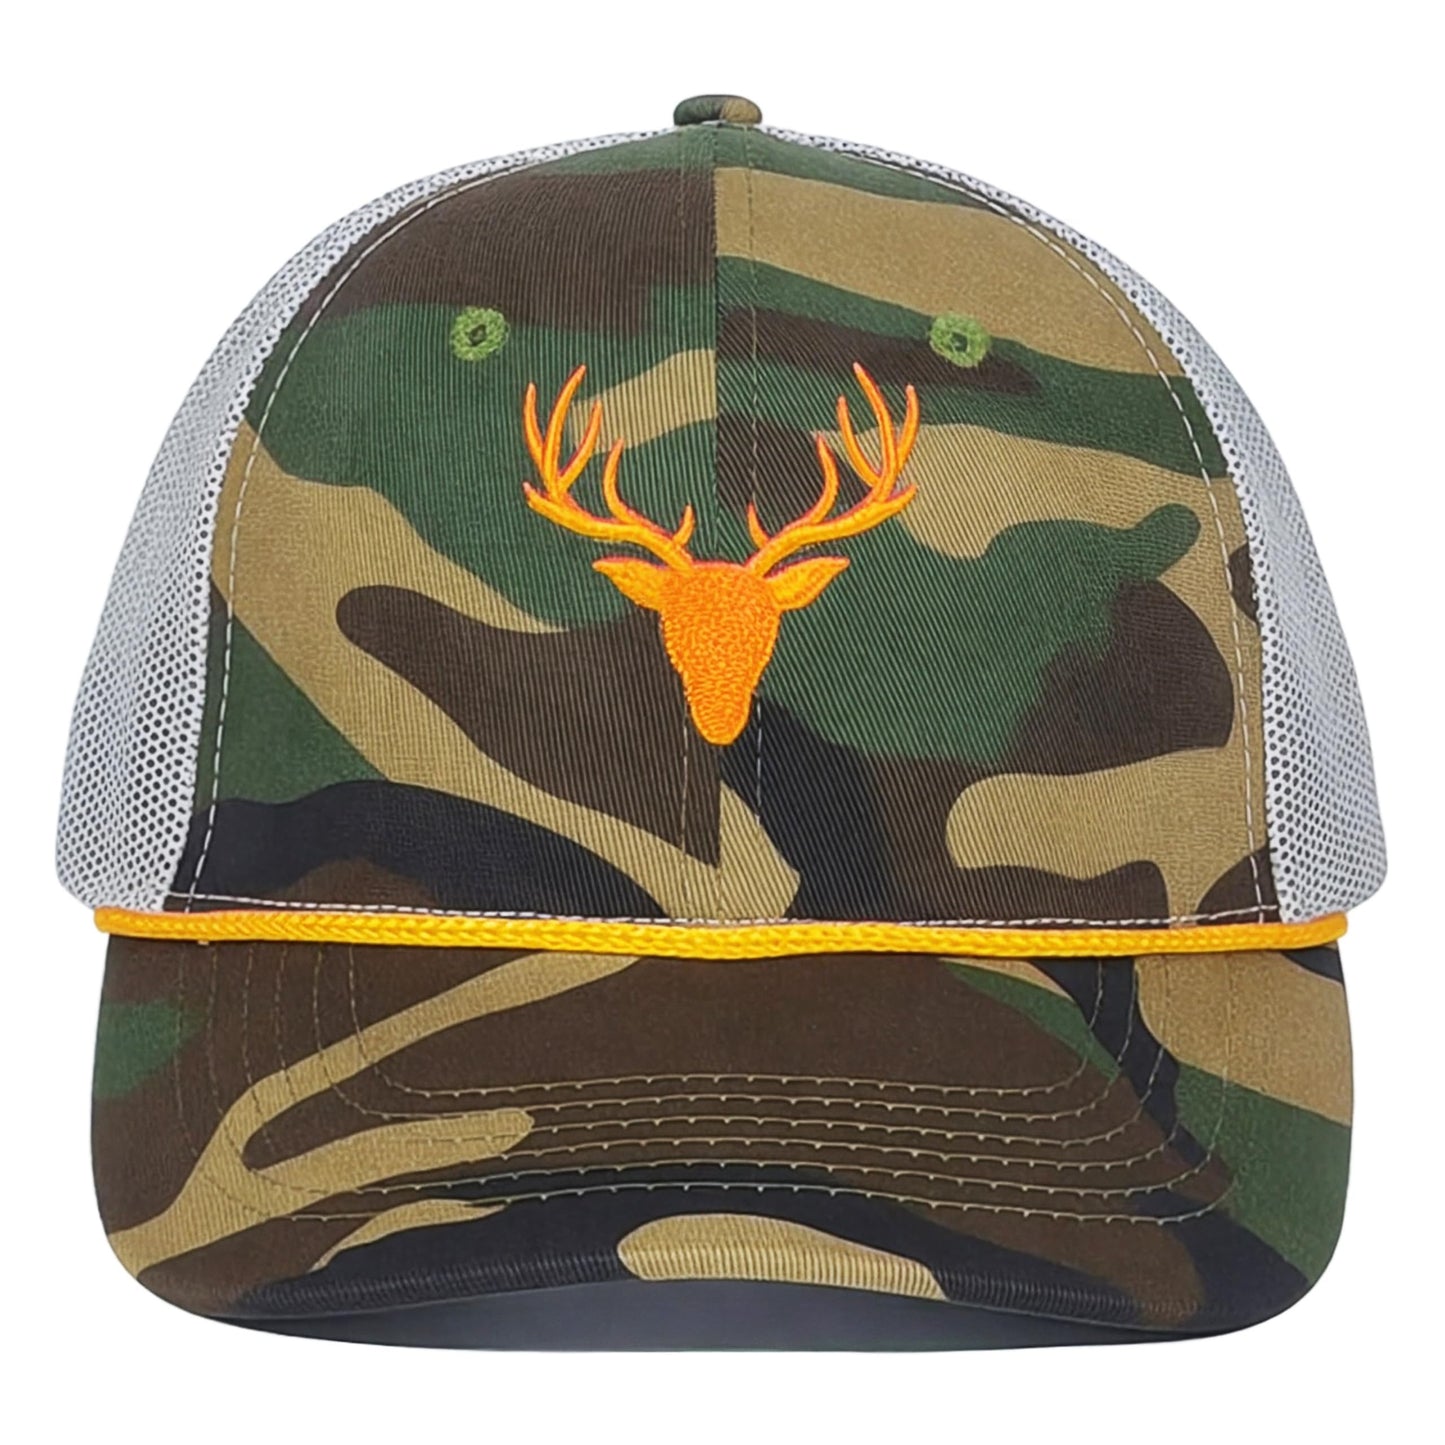 Duck/Deer Hunting Hat for Men Women, Beanie Hunting Gifts Accessories for Hunter Blaze Orange/Camo/Black